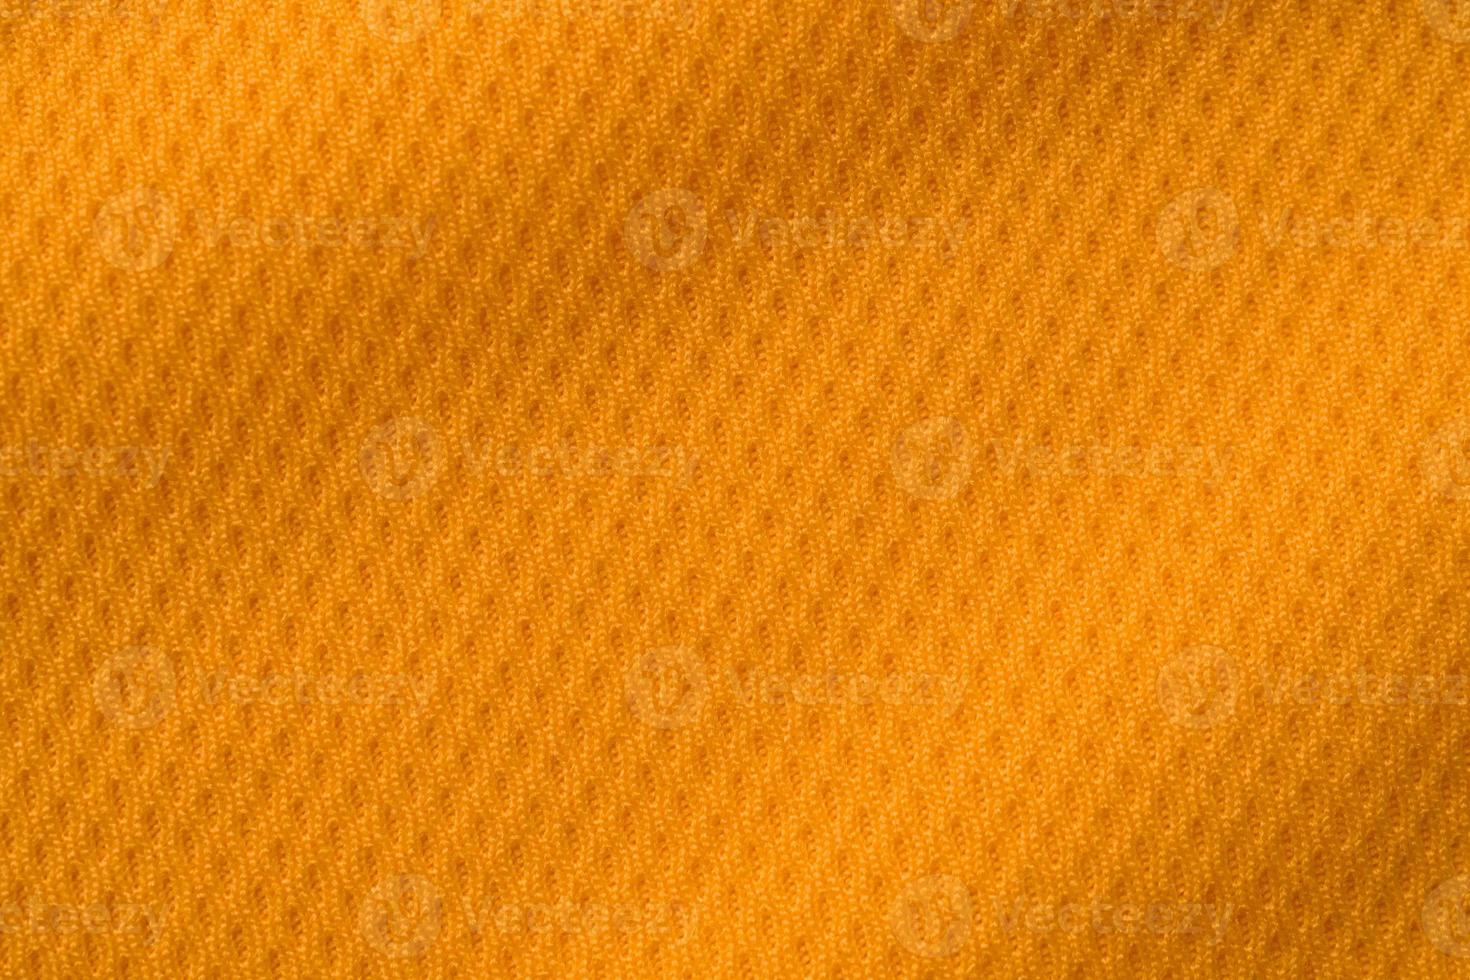 vista superior de textura de camiseta de fútbol de jersey de tela de ropa deportiva de color naranja foto